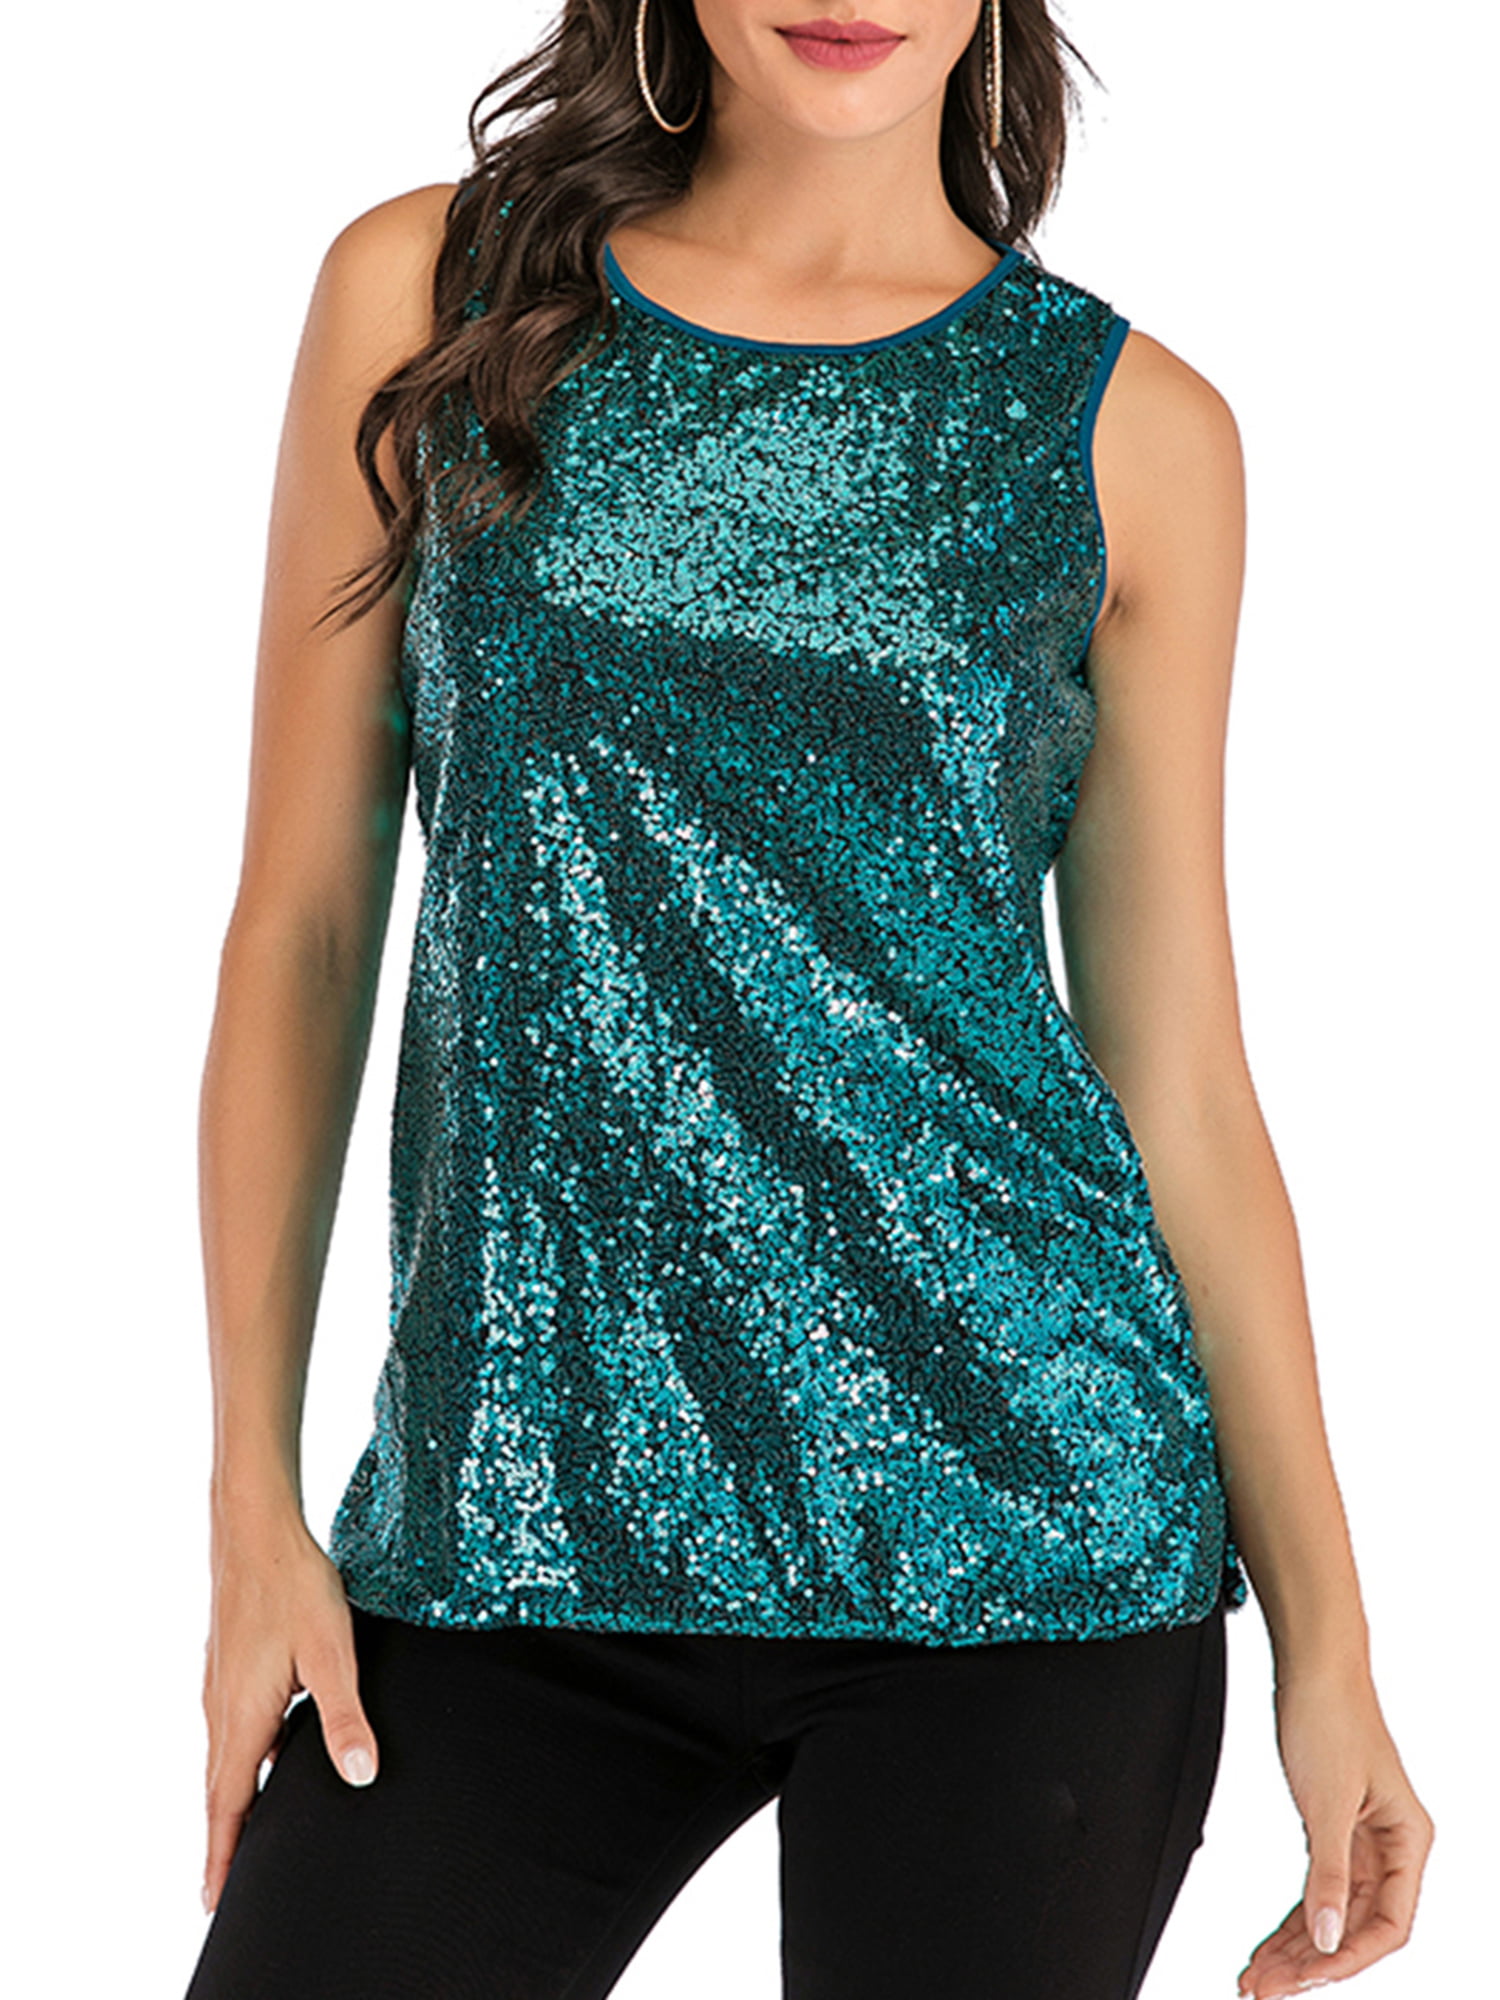 SAYFUT - SAYFUT Women's Sleeveless Sequin Shirt Top Sparkle Shimmer ...